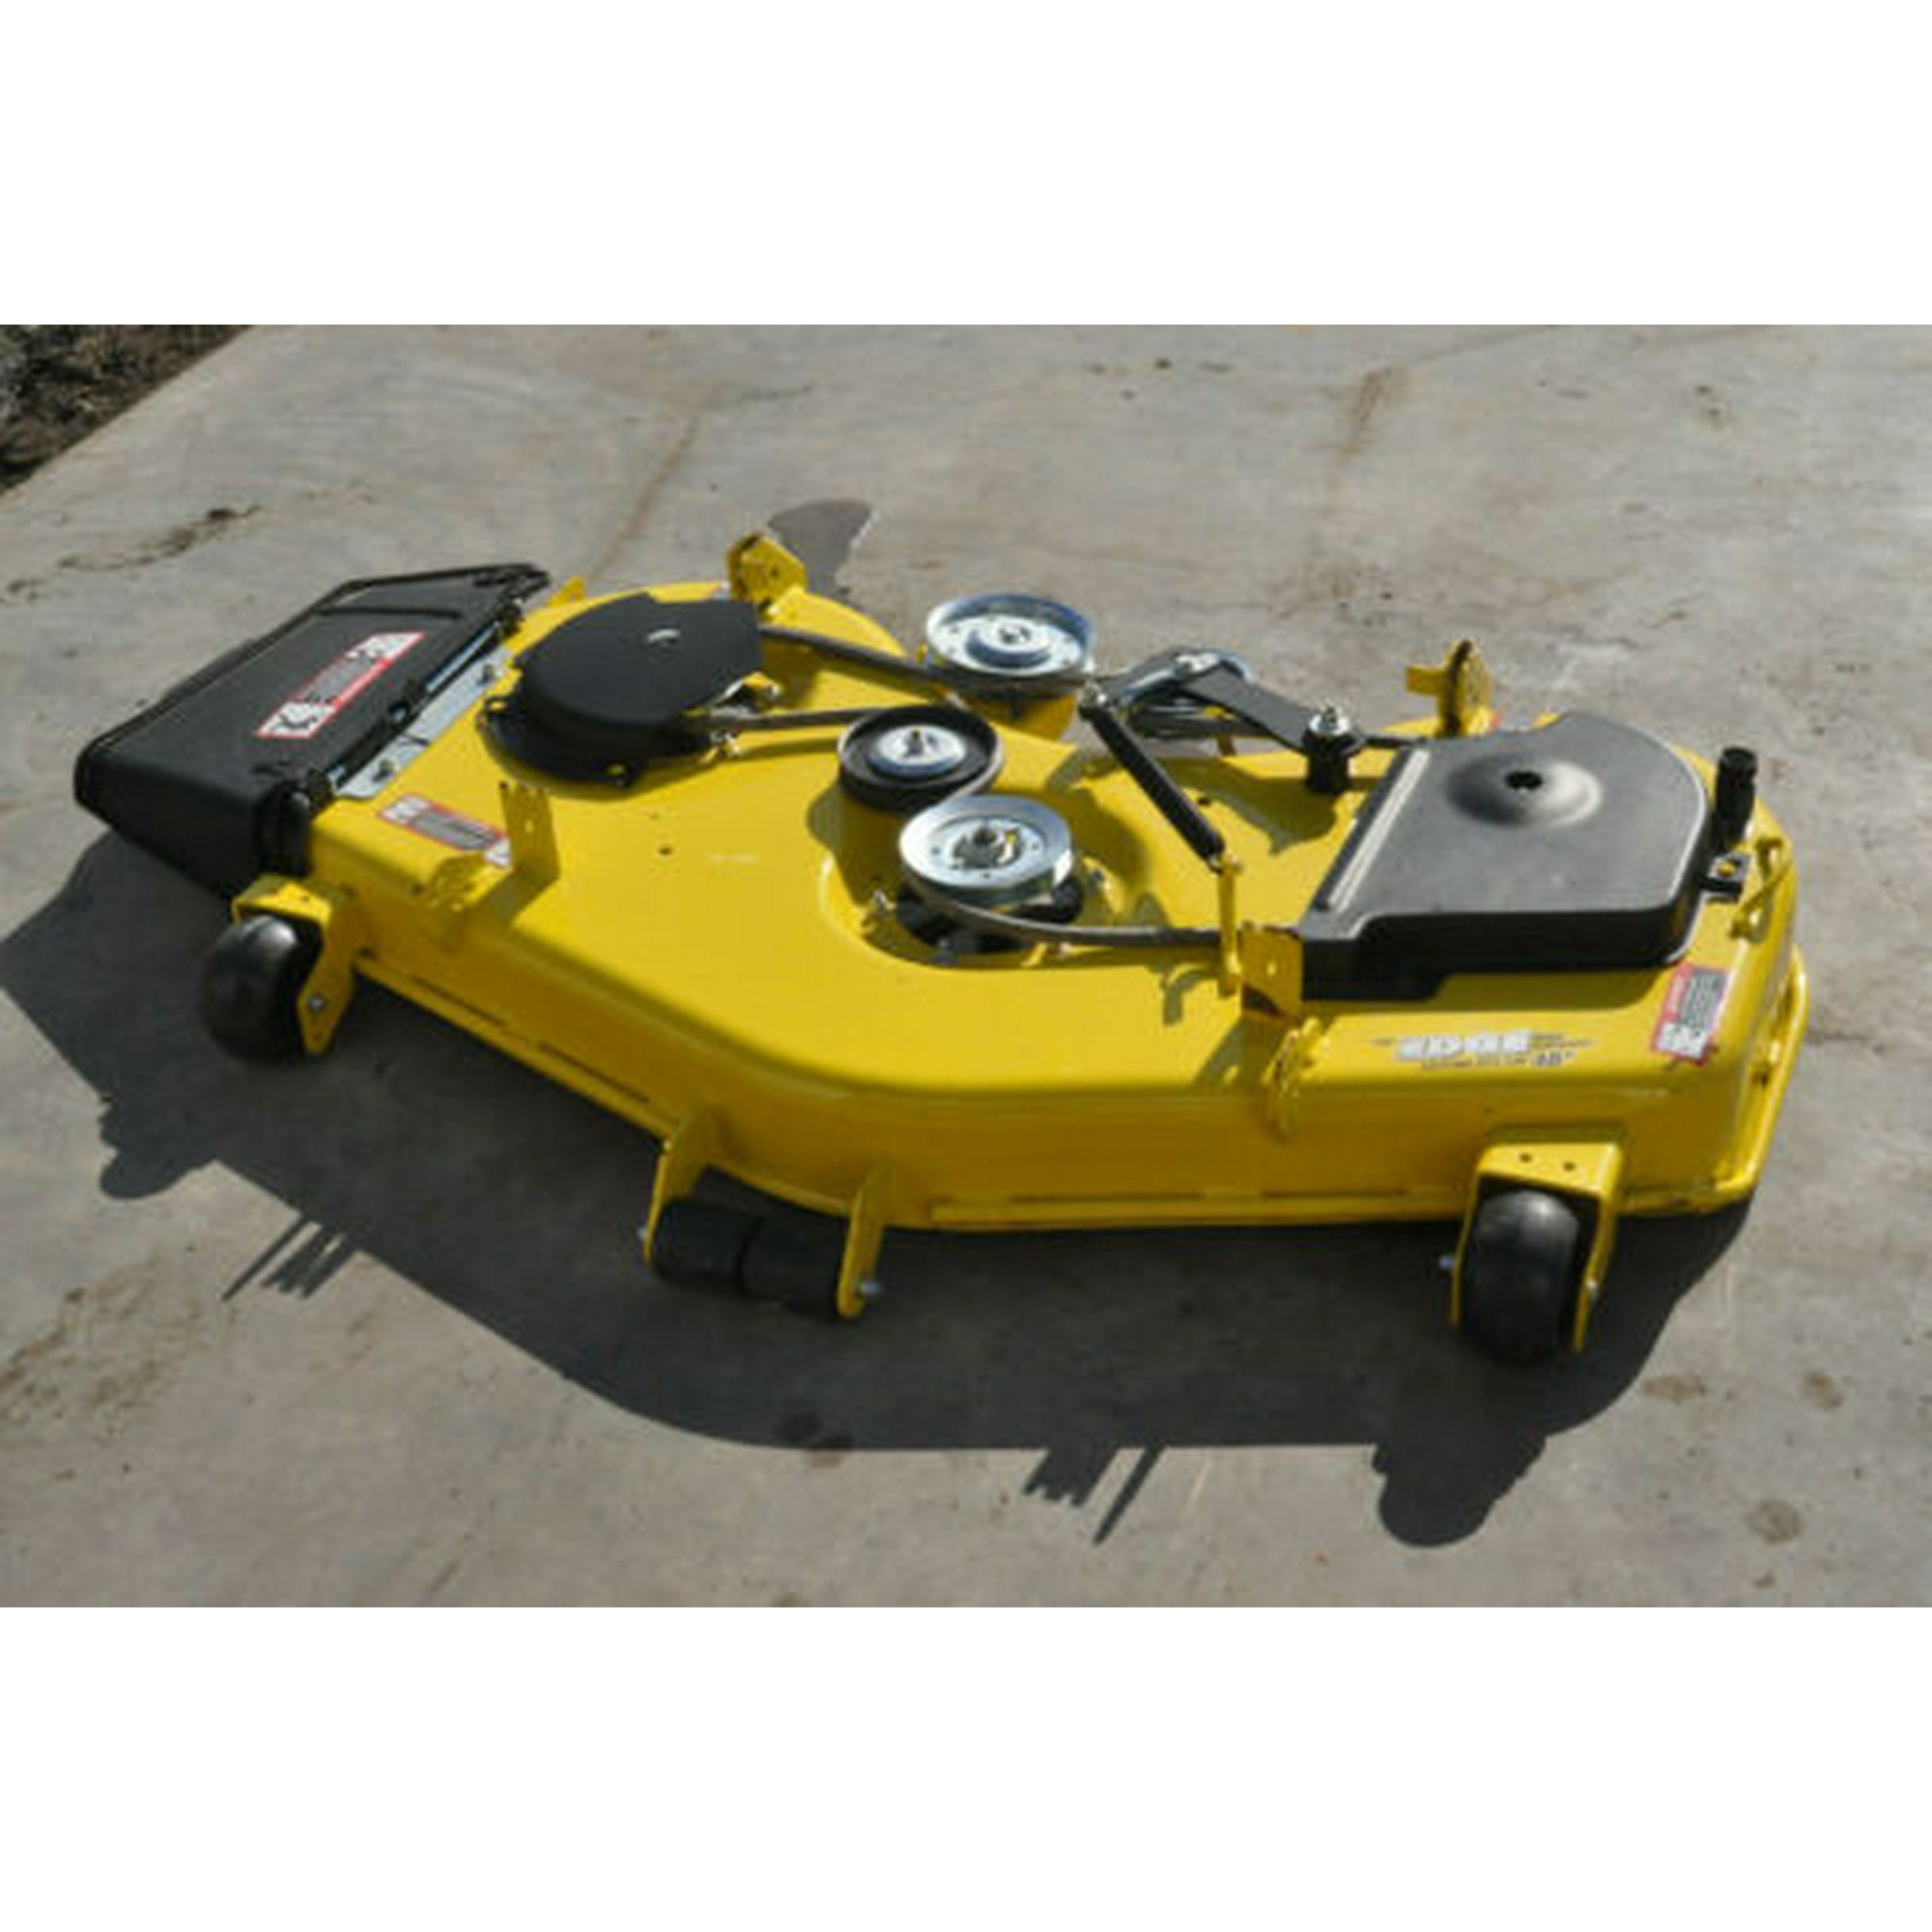 John Deere Complete Replacement 42 Inch Mower Deck Bg20936 60 Off